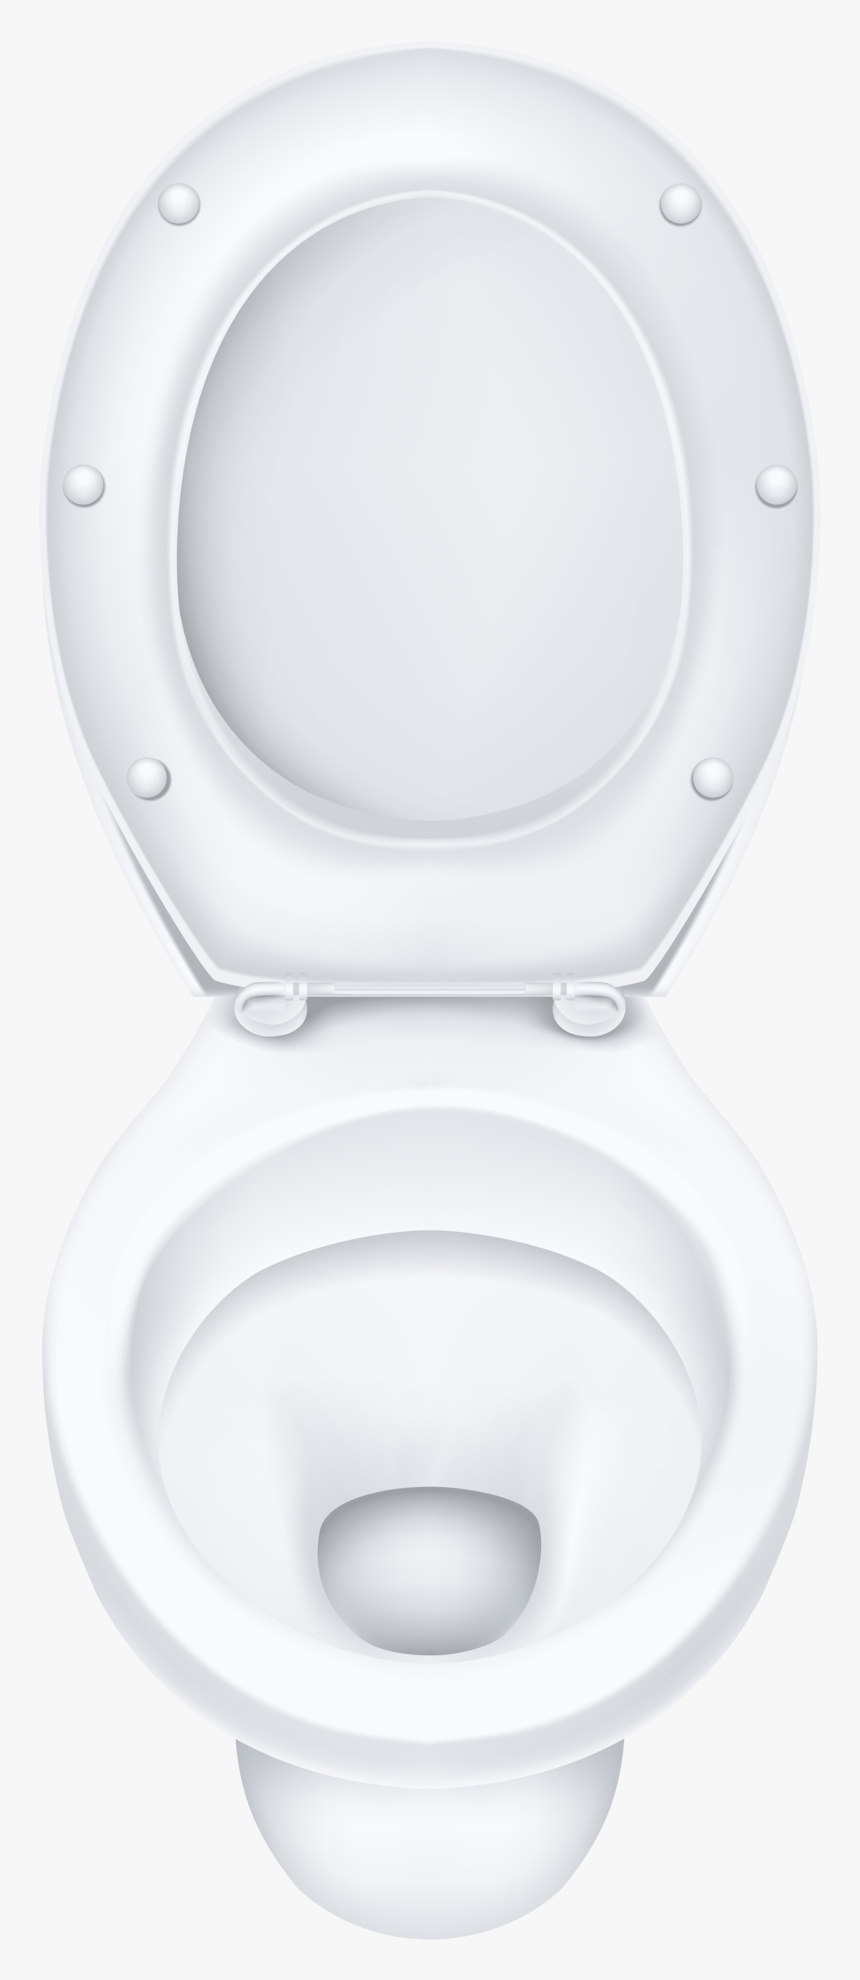 White Toilet Bowl - Toilet Bowl Png, Transparent Png, Free Download